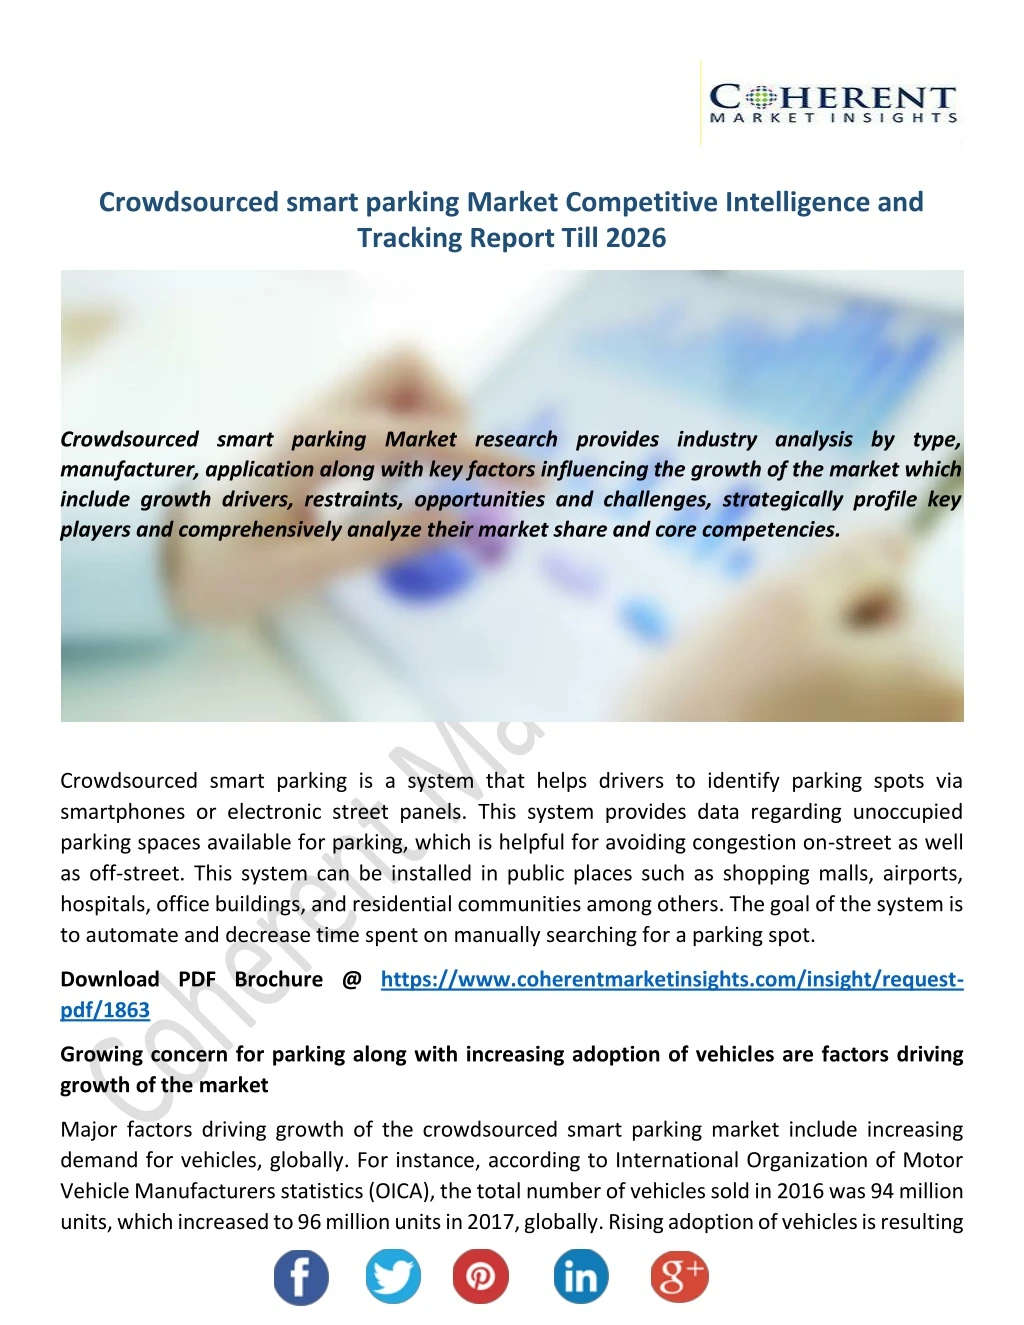 crowdsourced smart parking market competitive